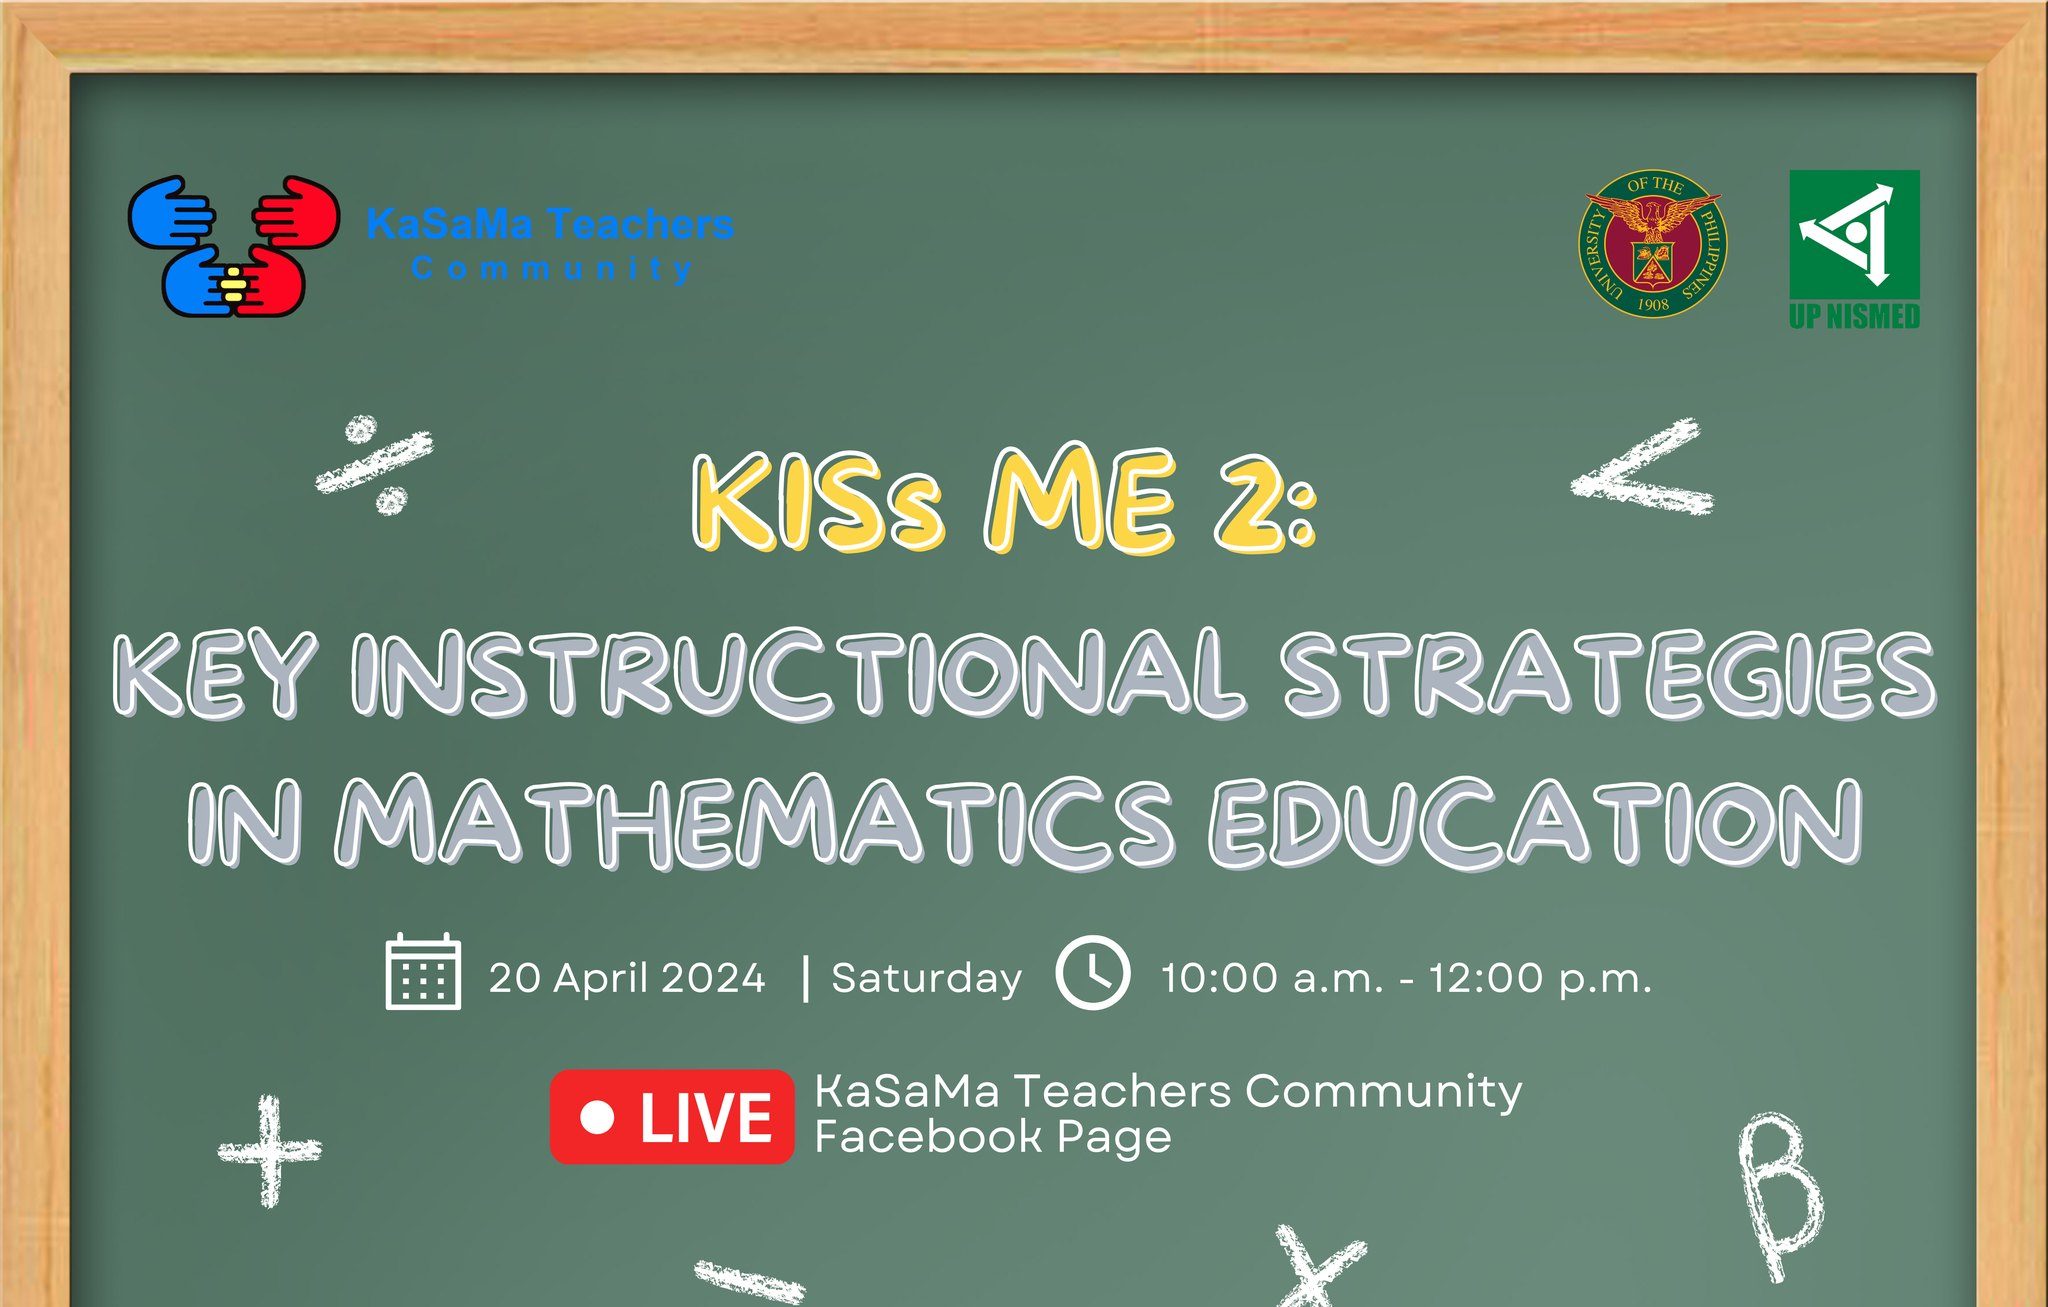 KISs ME 2: Key Instructional Strategies in Mathematics Education